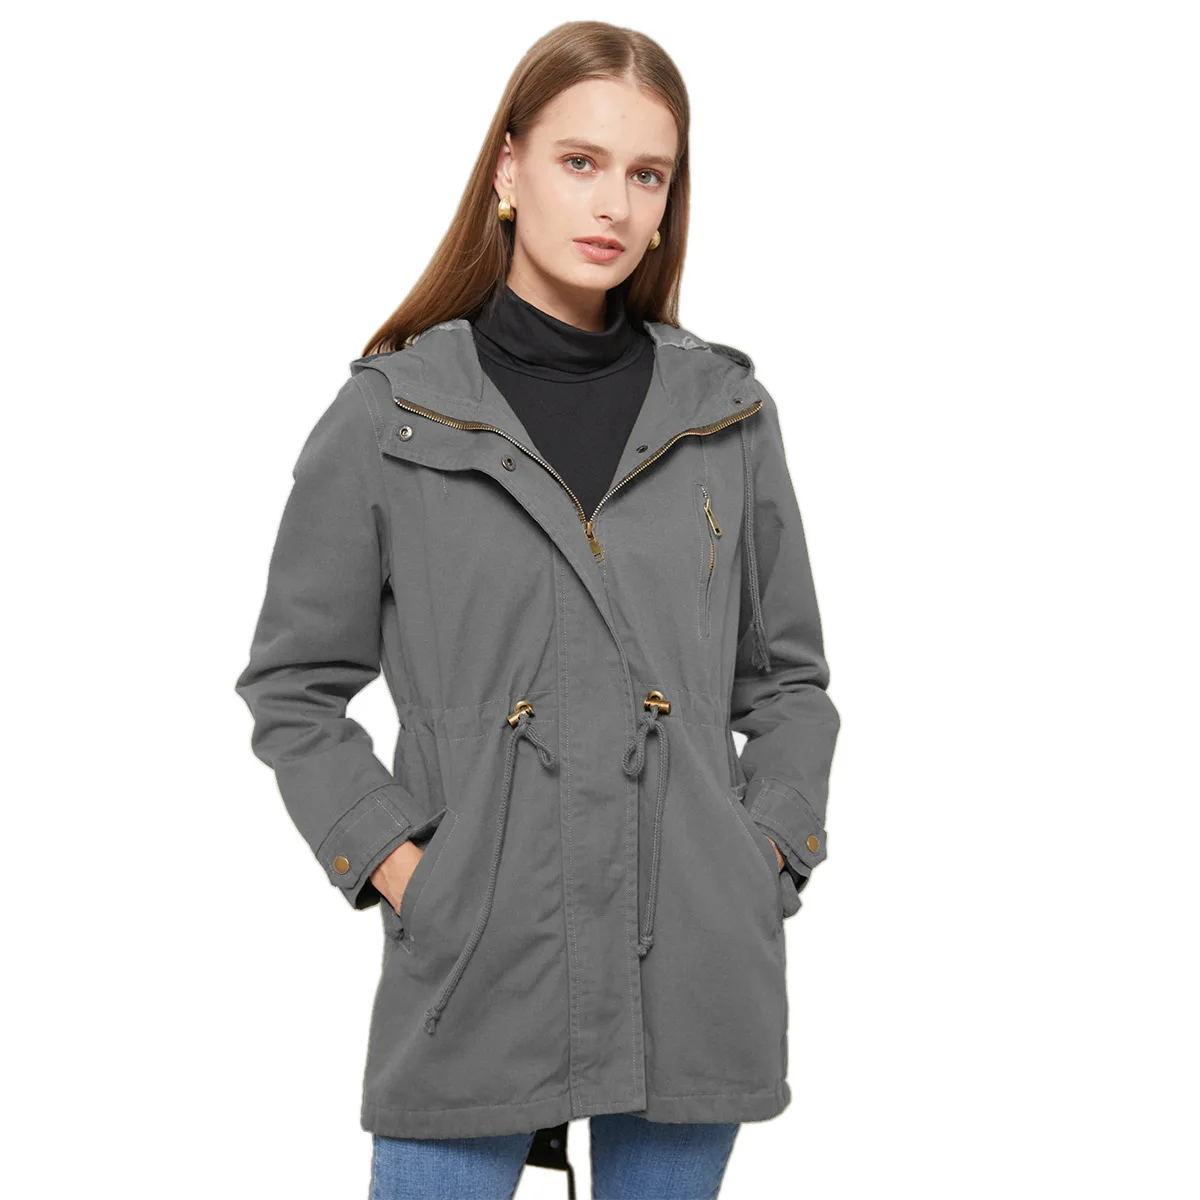 2022 Spring and Autumn New Cotton Hooded Jacket Trench Coat Female Jacket Large Size Loose Jacket Top Coats